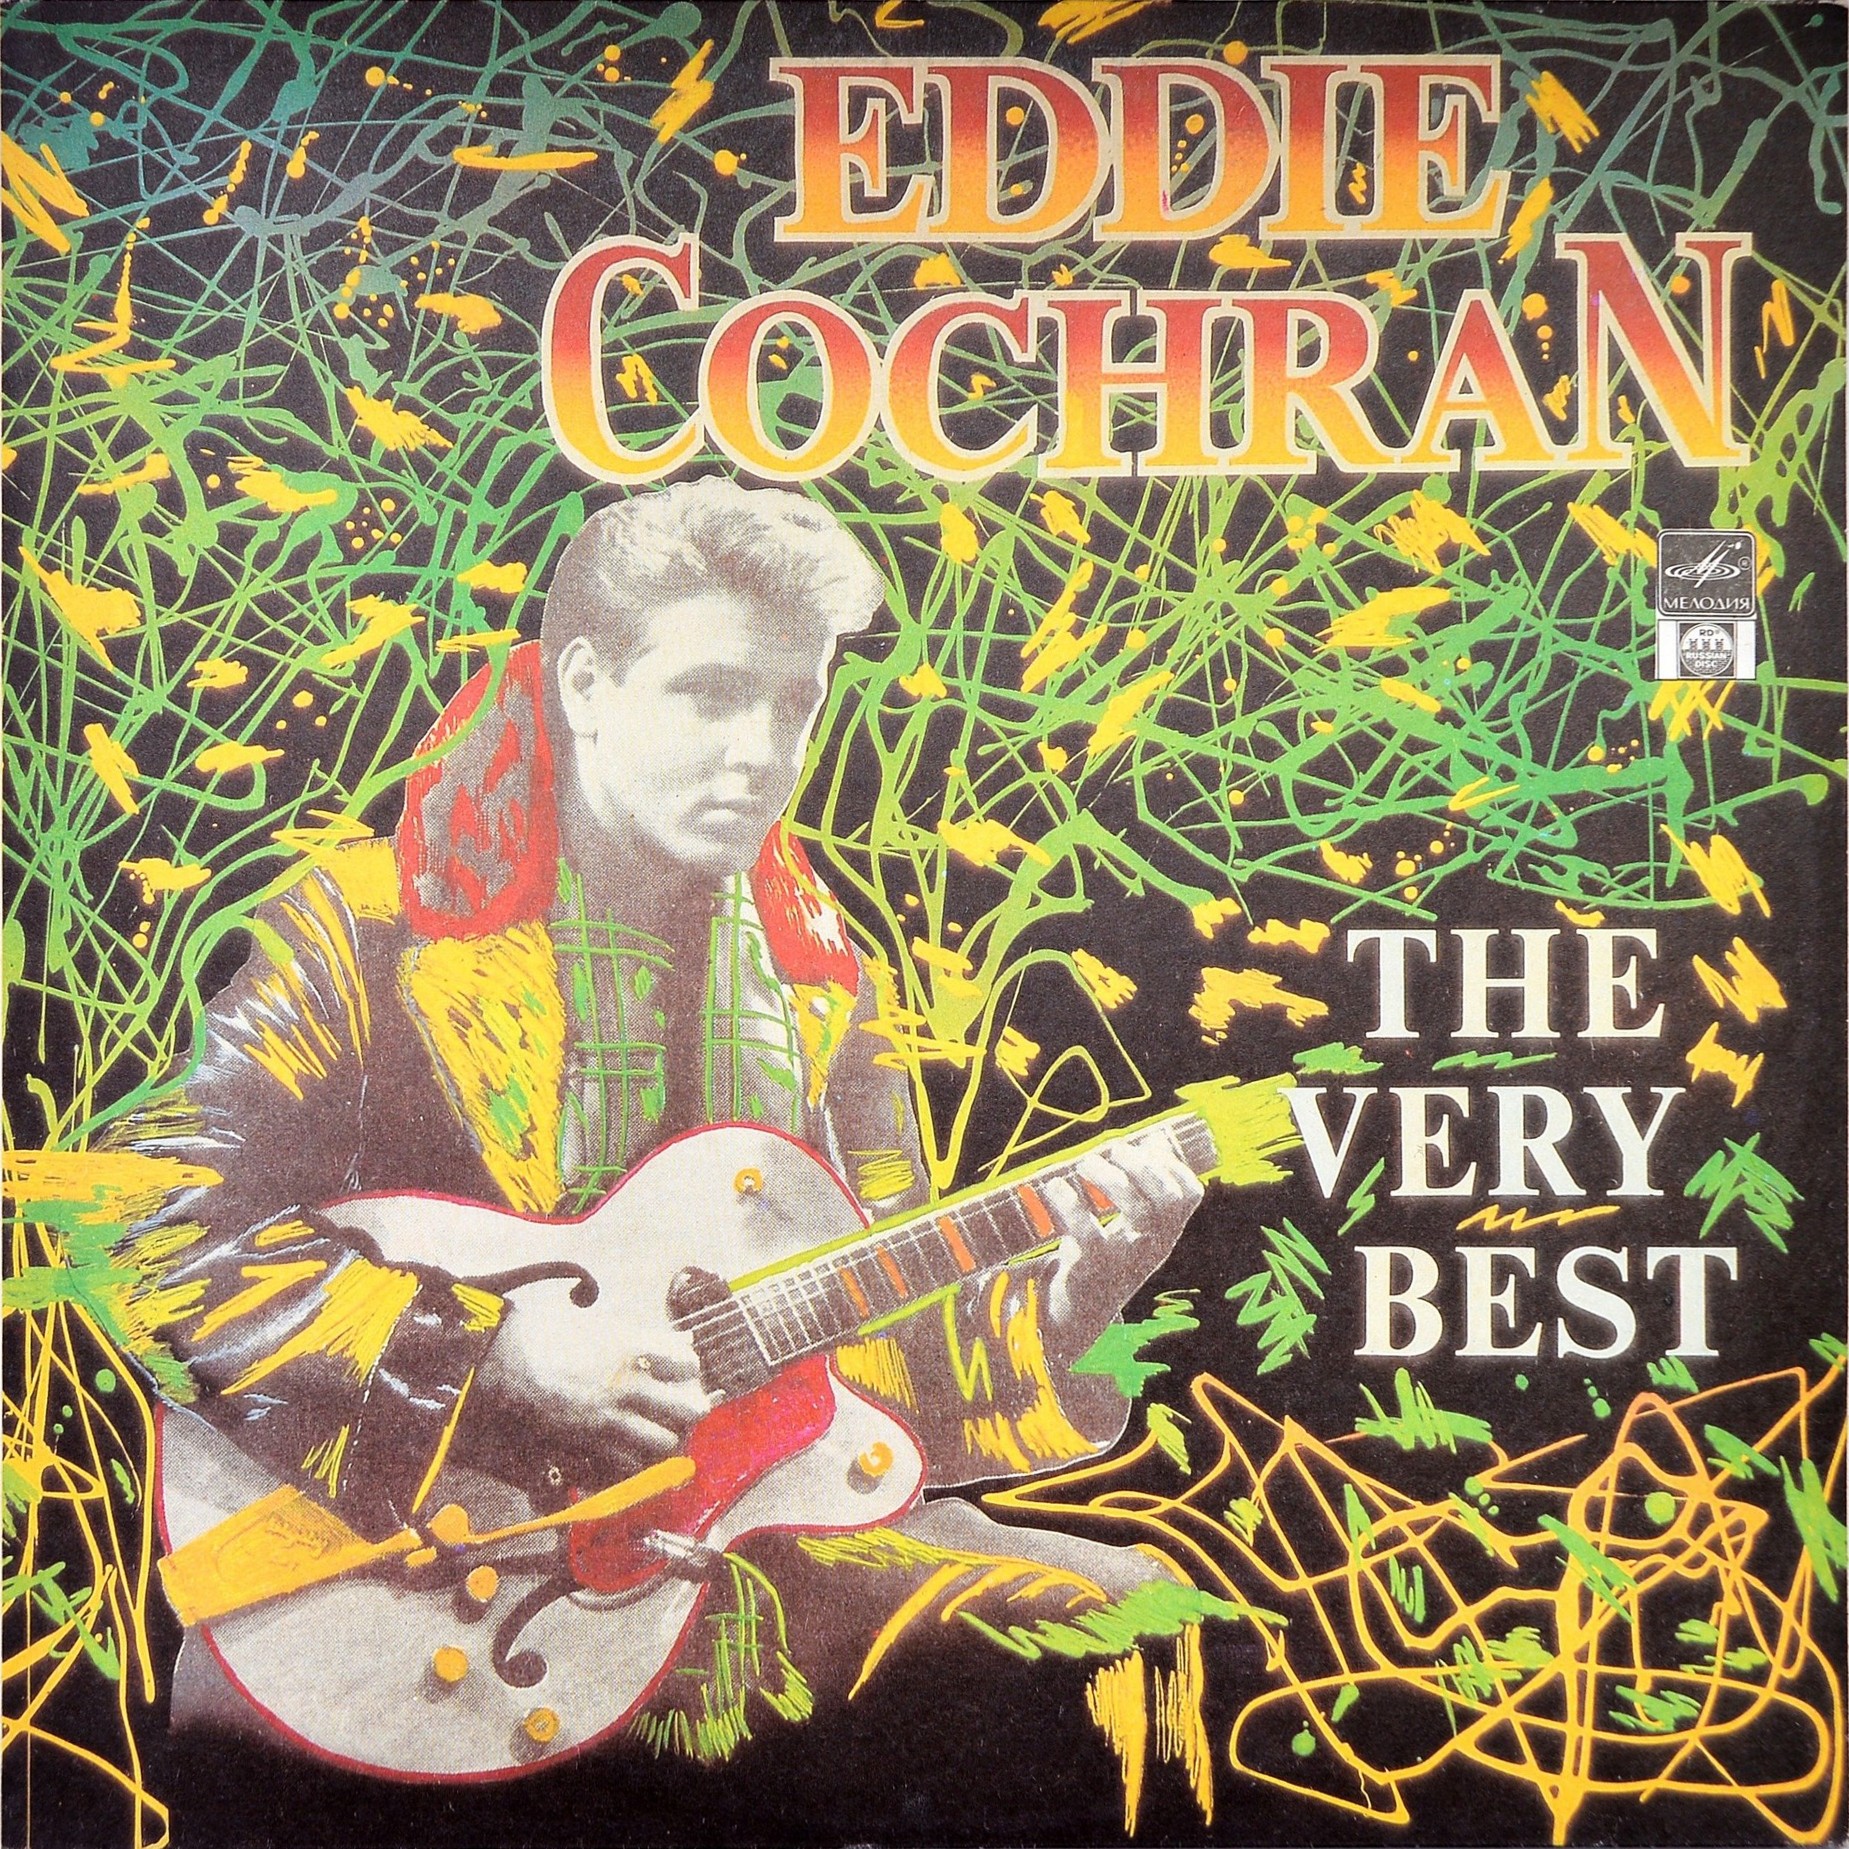 EDDIE COCHRAN – “The Very Best”